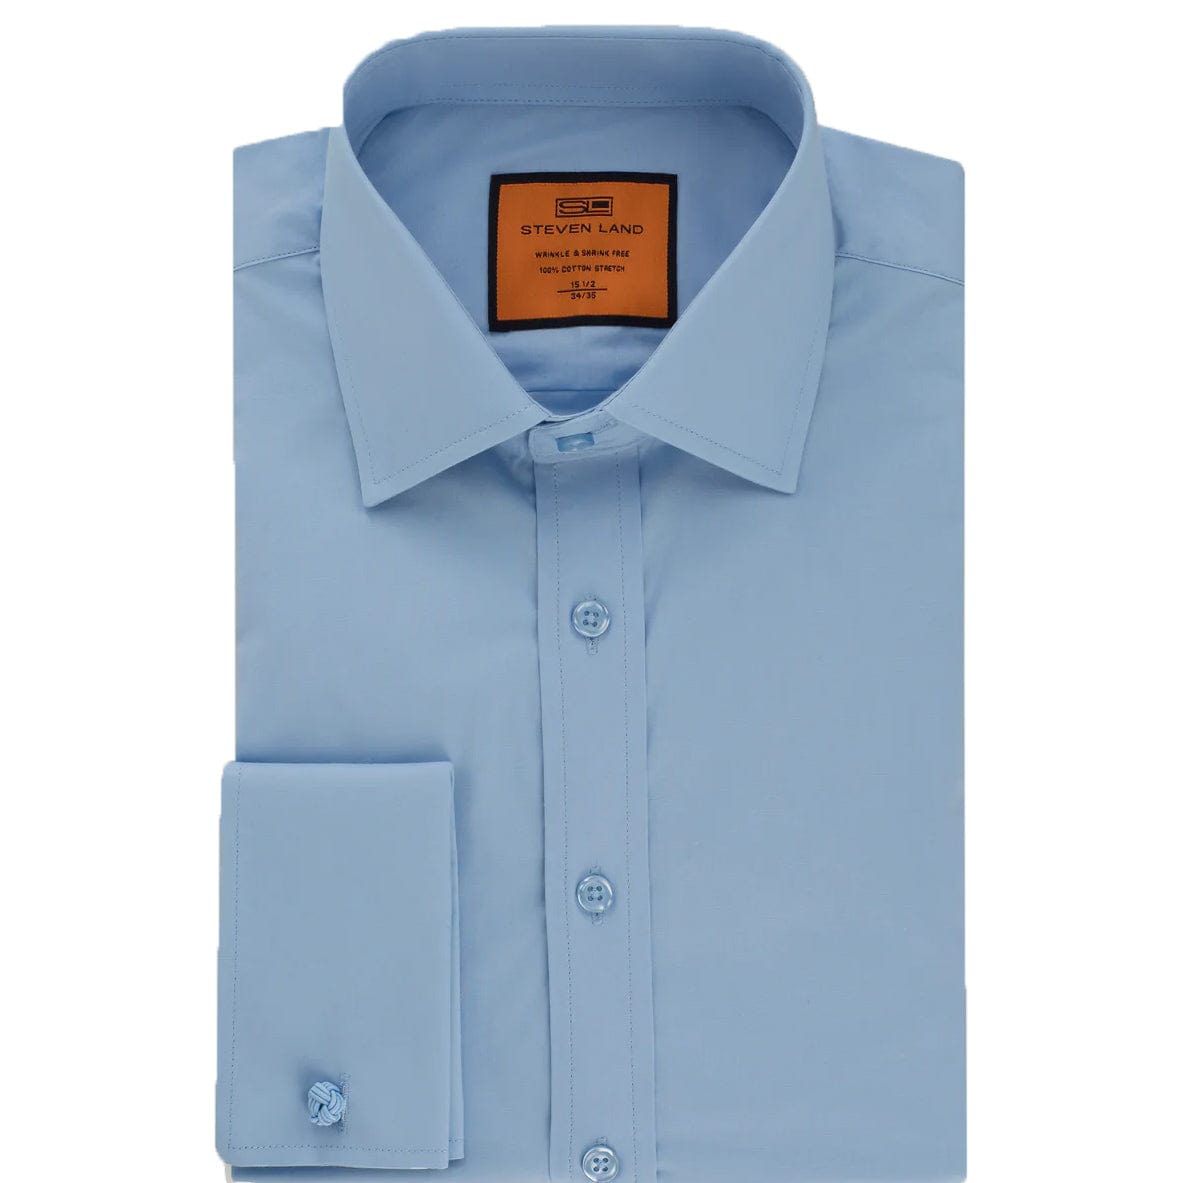 LND NECKWEAR INC. S CF BLUE / 16.5 Steven Land Dress Shirt| Classic Fit | French Cuff | 100% Cotton/Ds115f 6/7